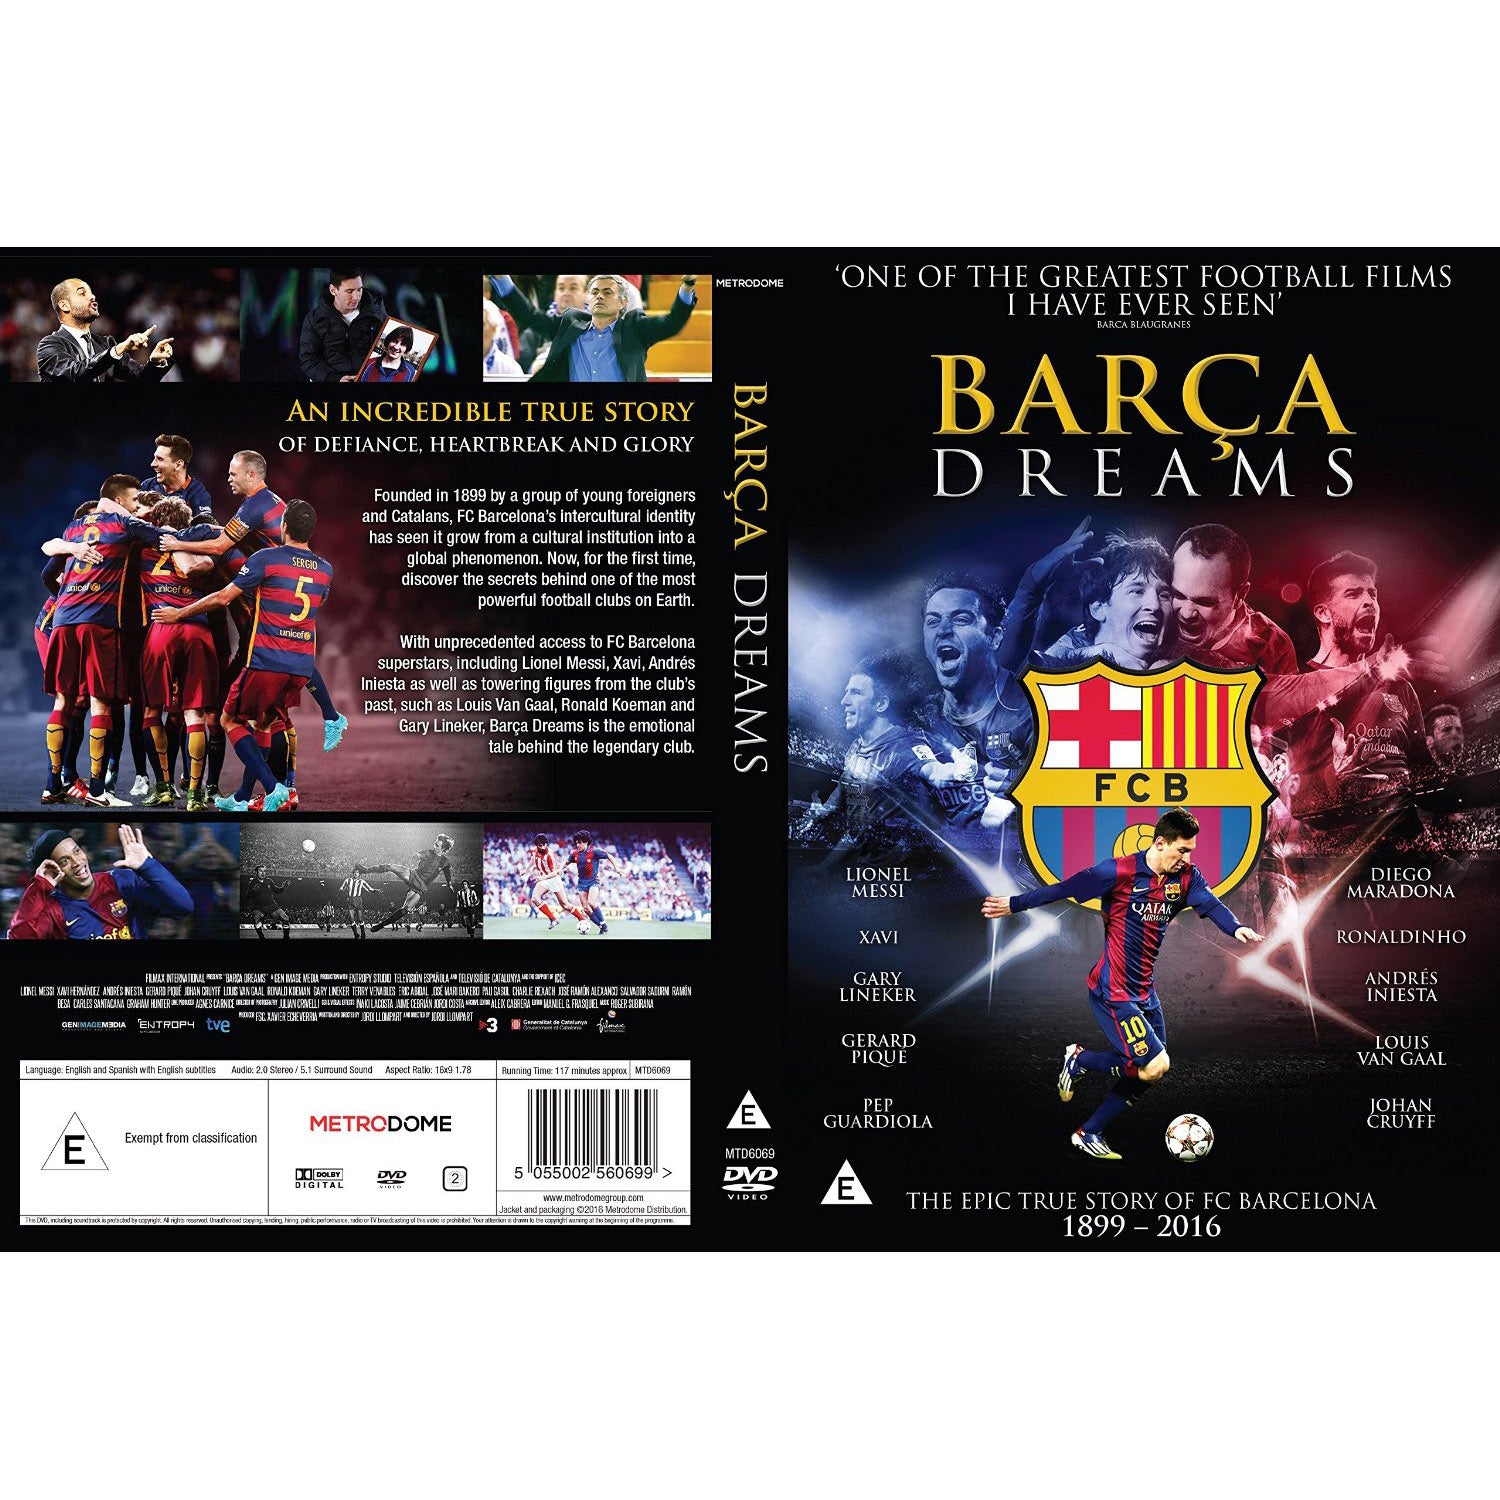 Barca Dreams – The Epic True Story of FC Barcelona 1899-2016